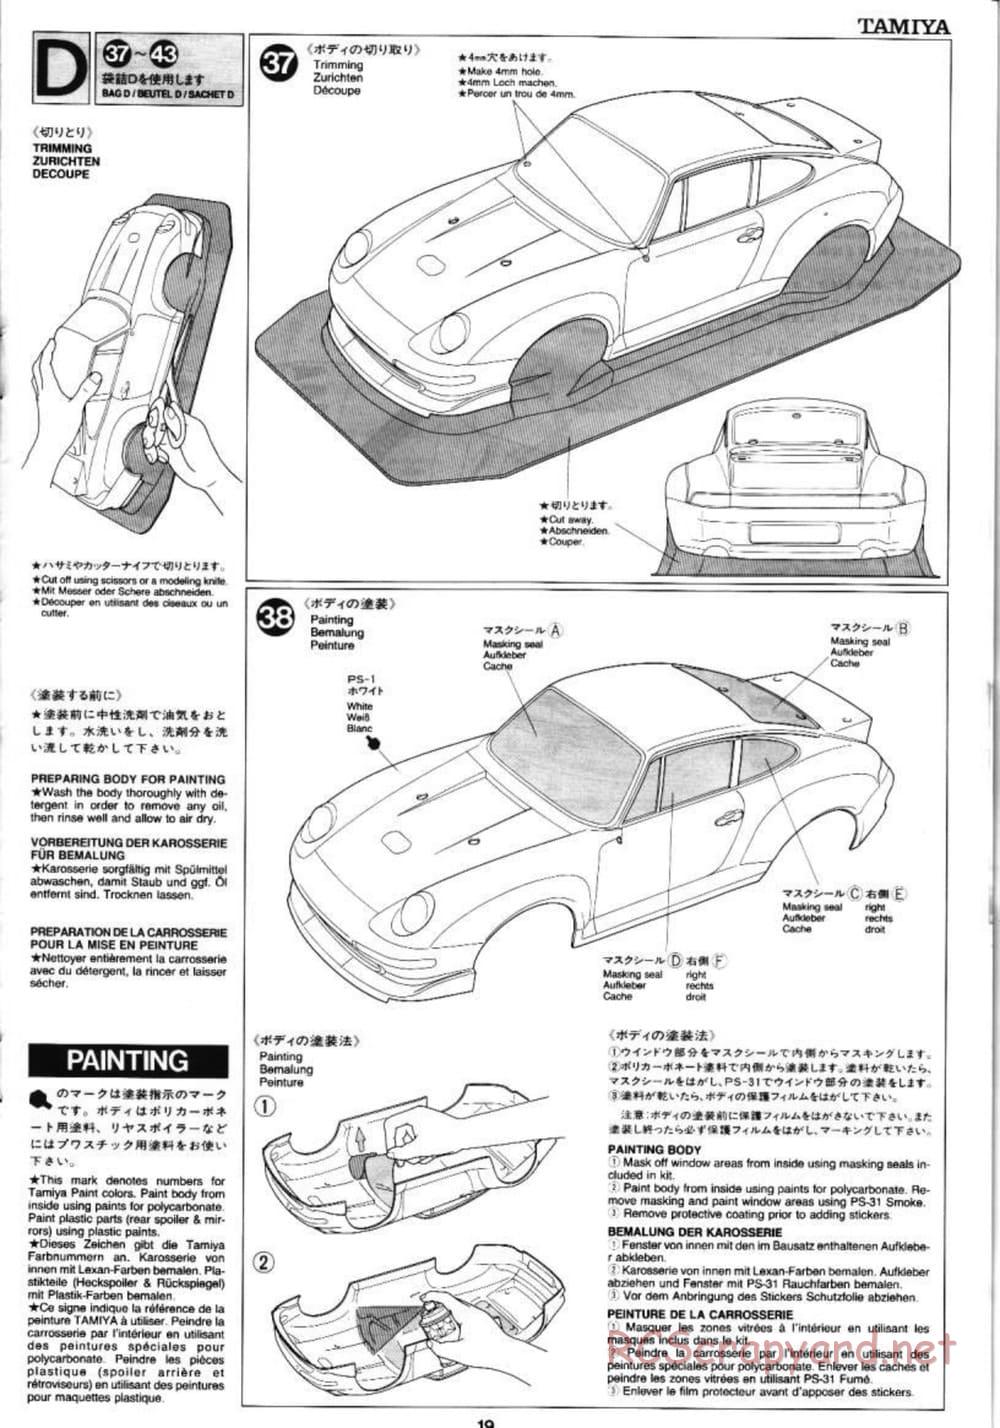 Tamiya - PIAA Porsche 911 - TA-03RS Chassis - Manual - Page 19